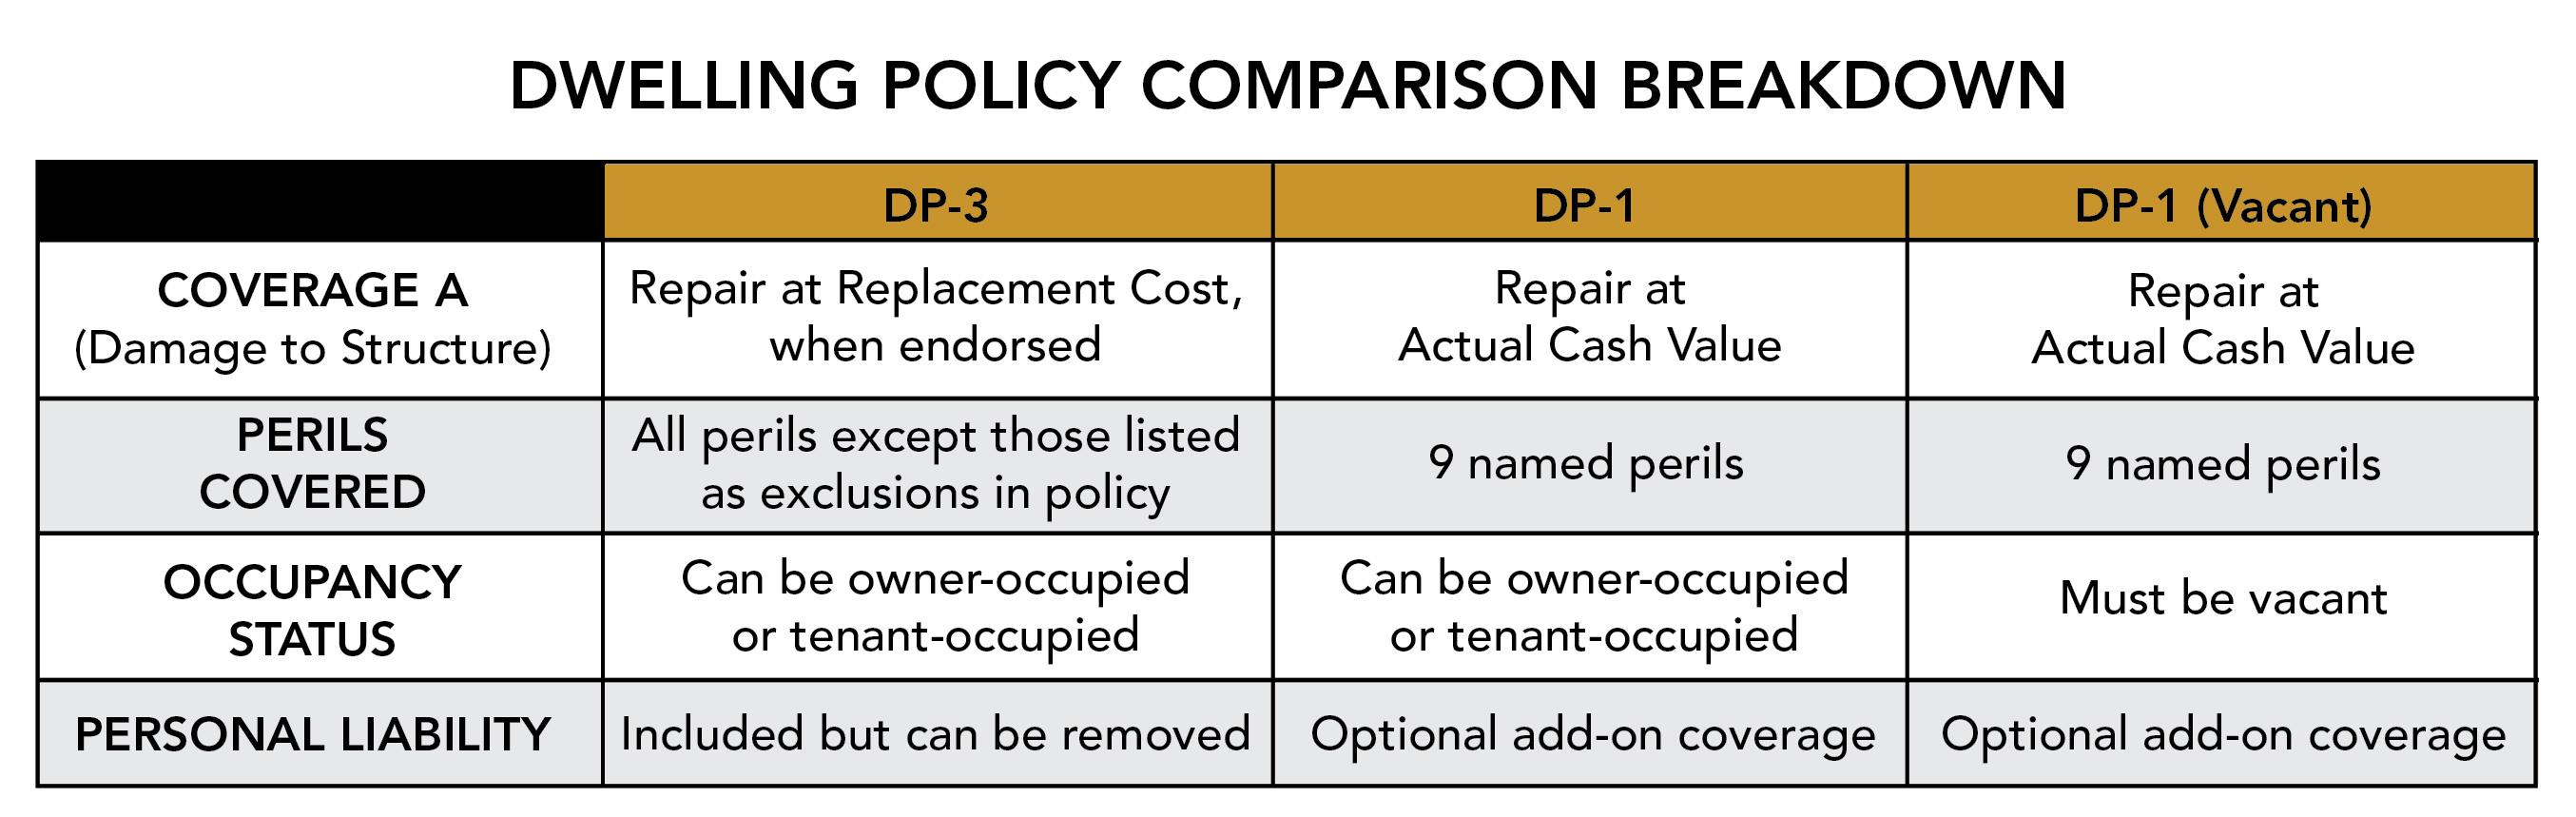 Dwelling policy comparison breakdown chart